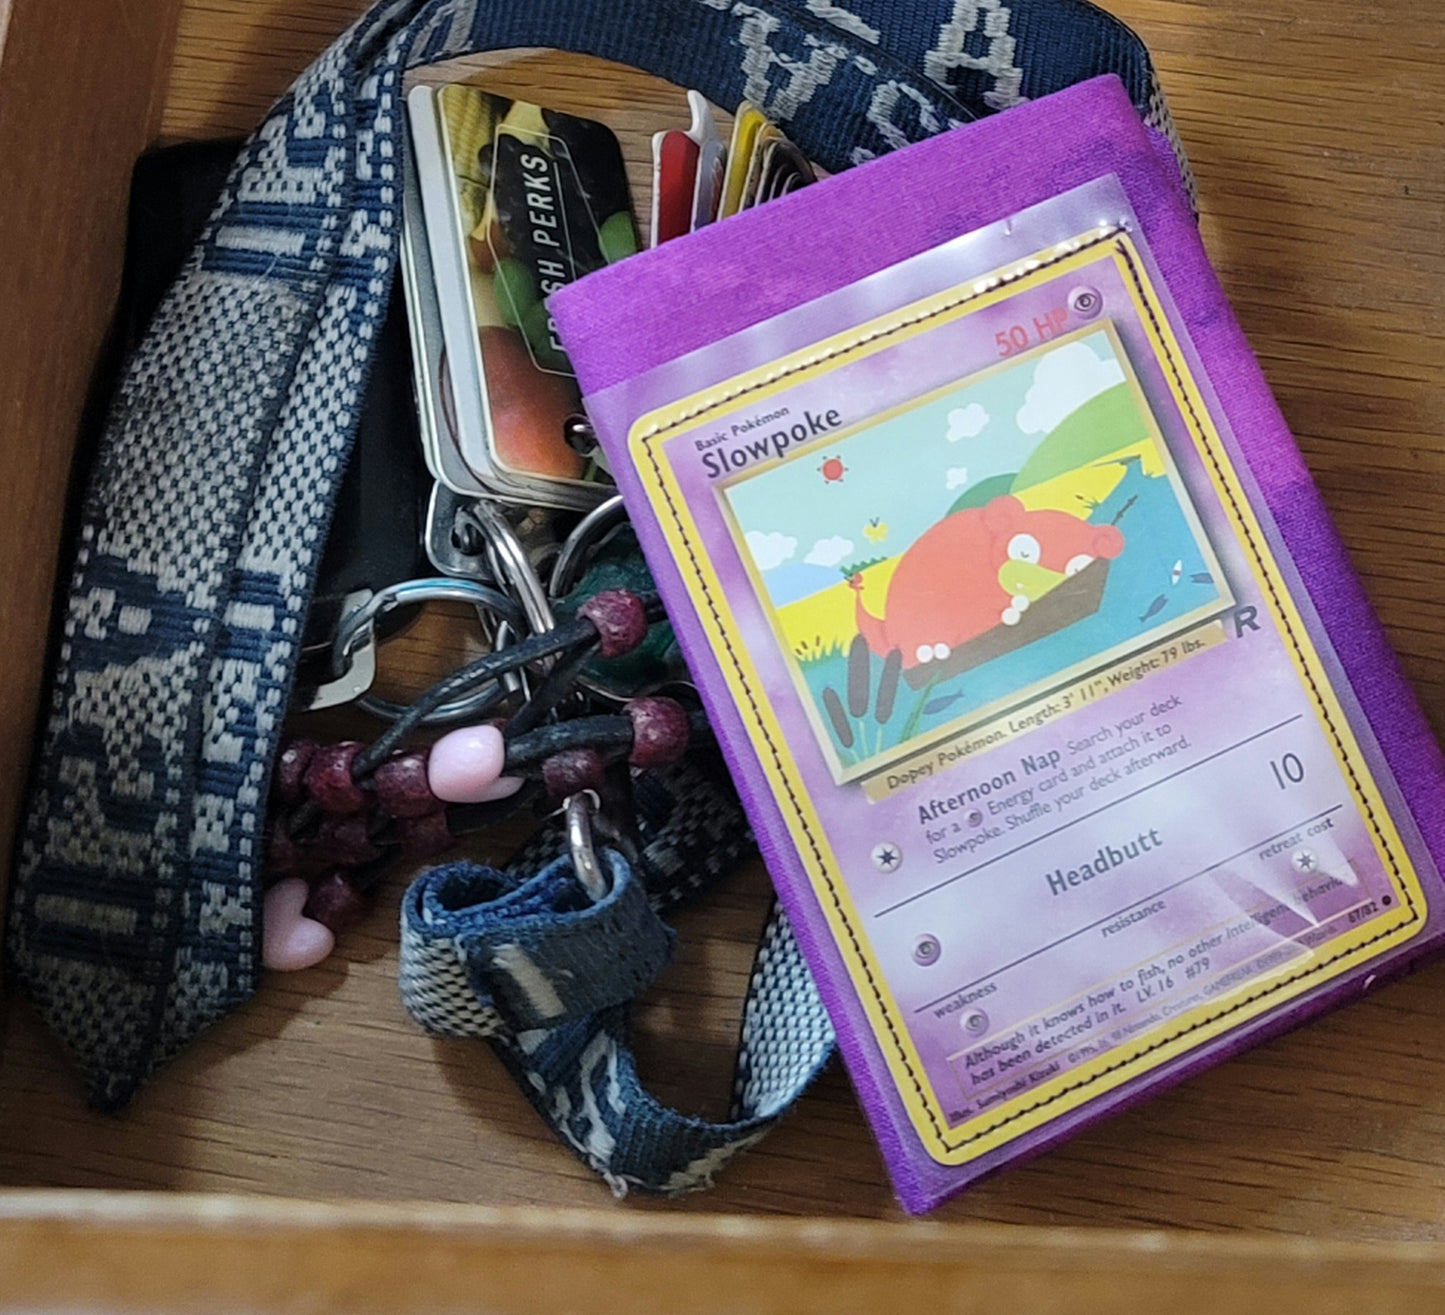 Handmade Slowpoke Pokemon card cloth wallet